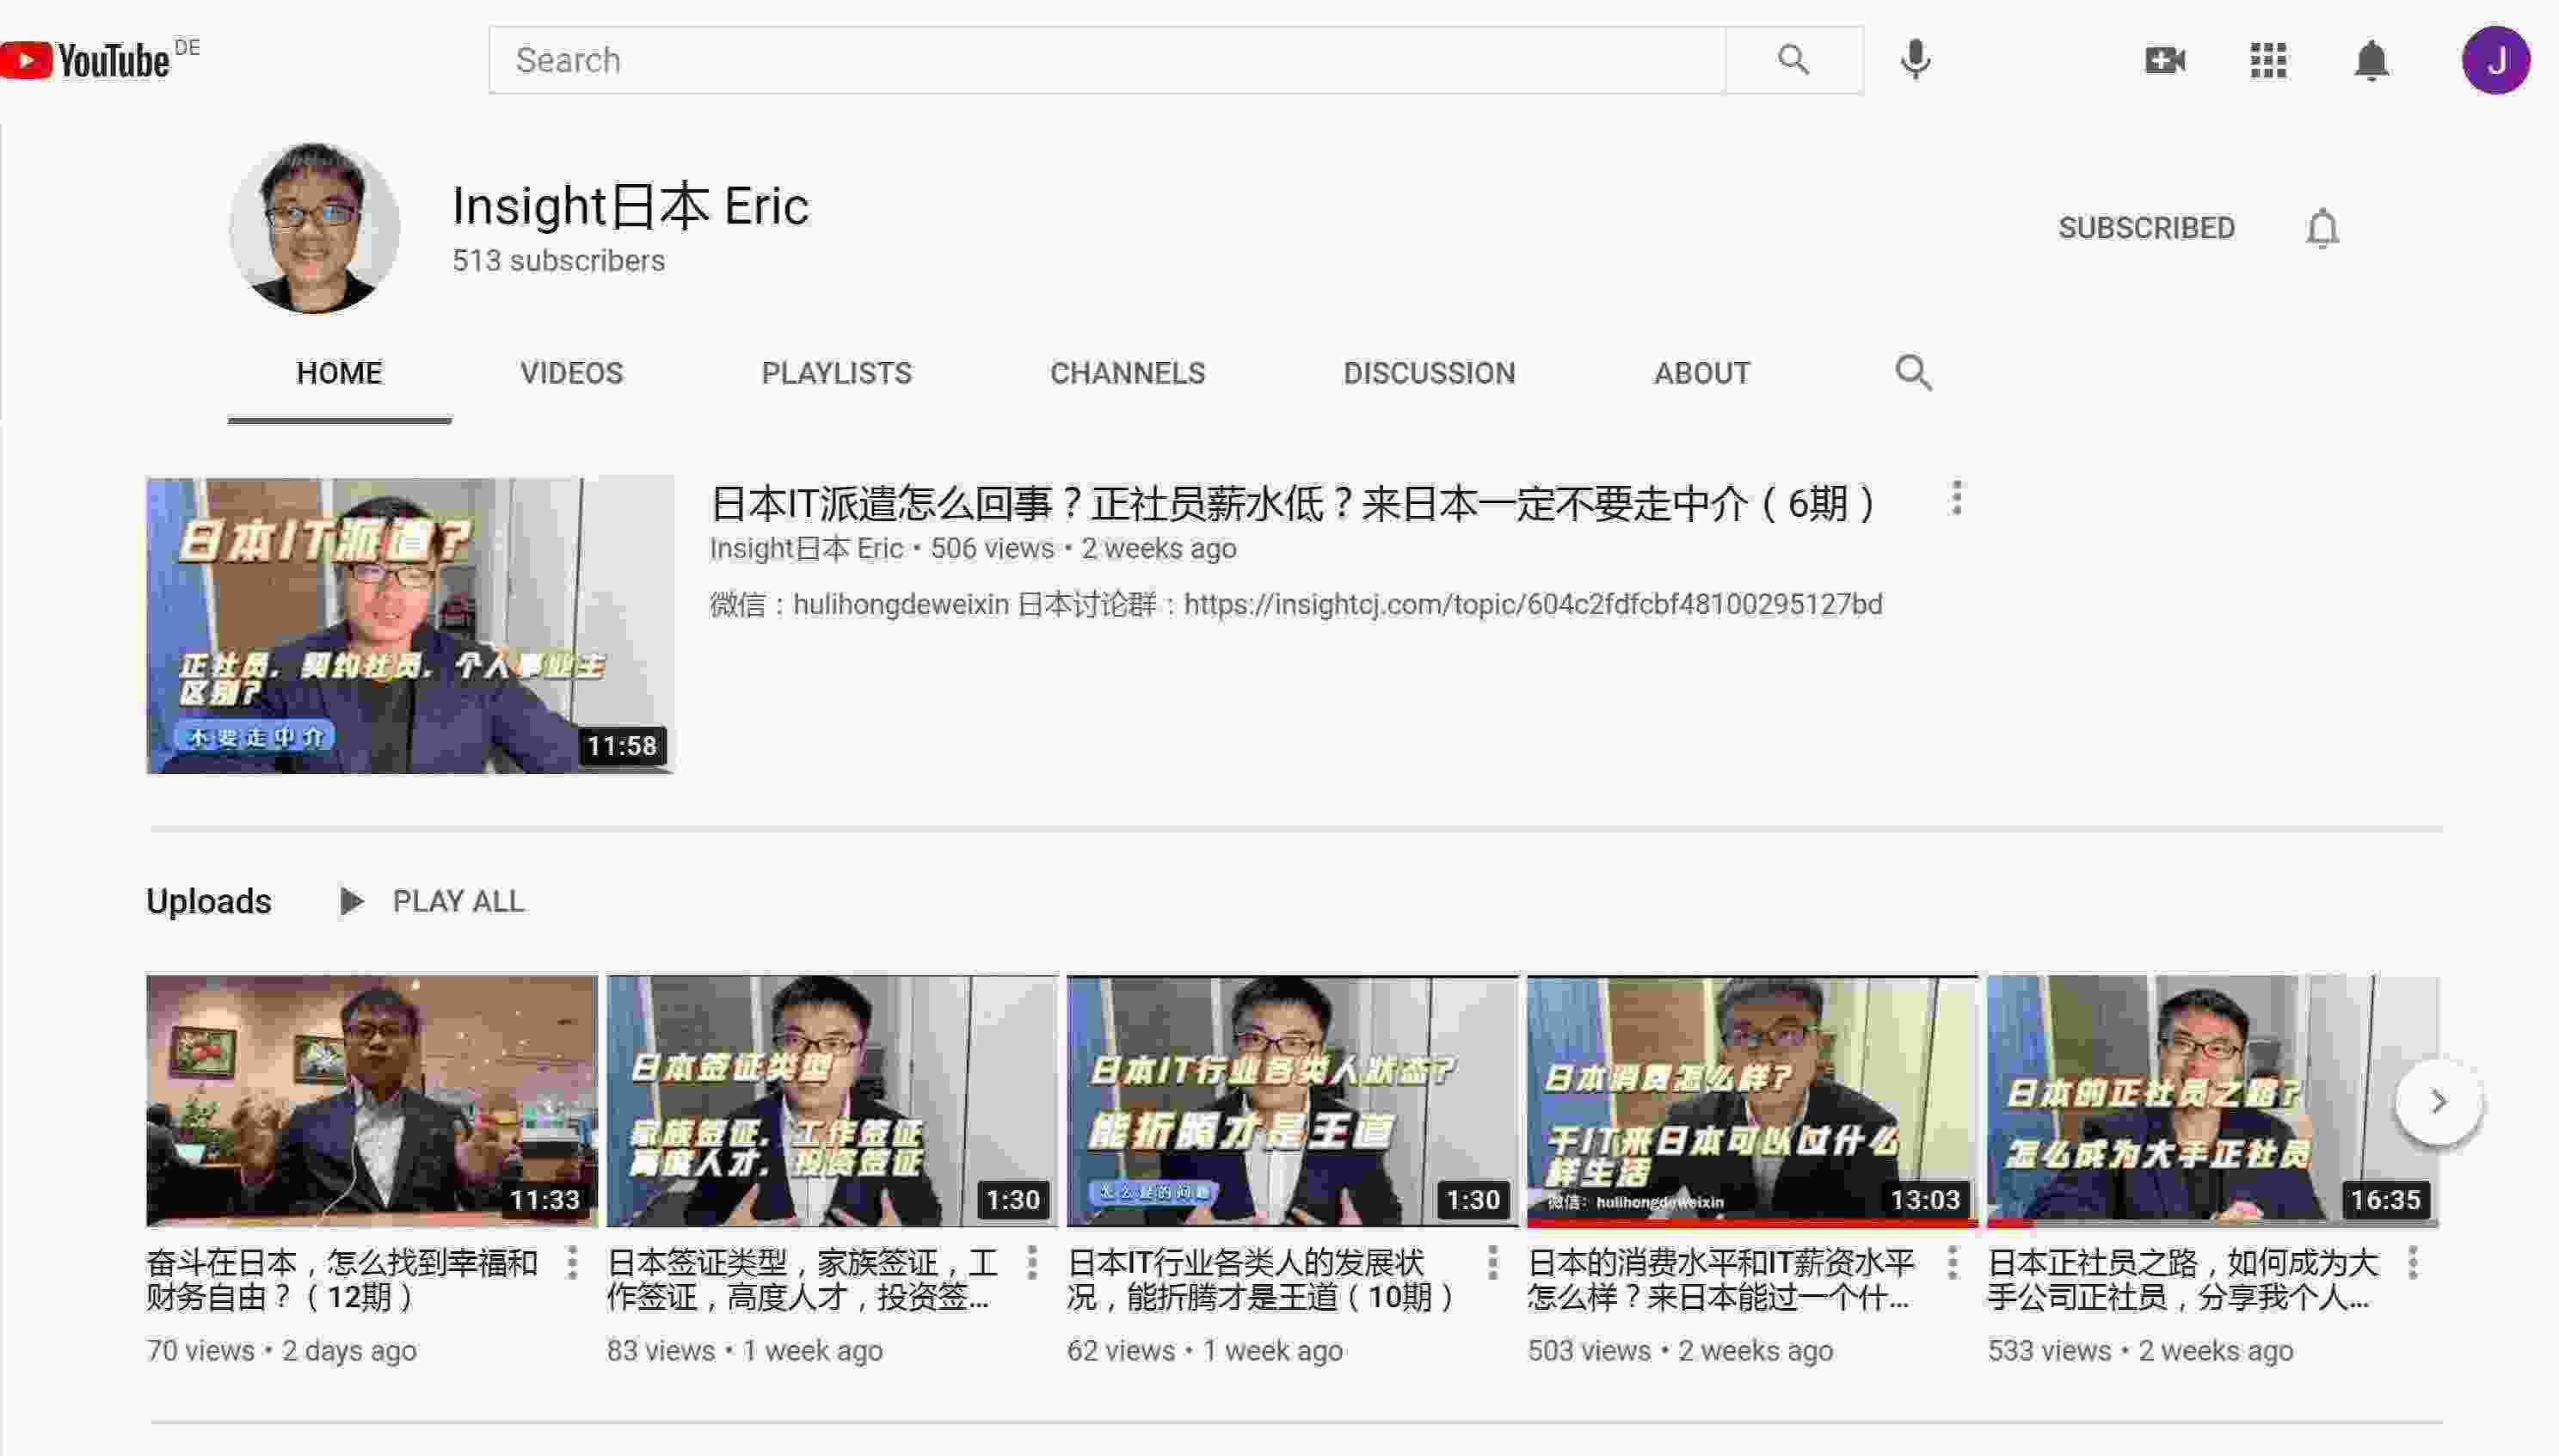 Insight日本-Eric-YouTube.jpg